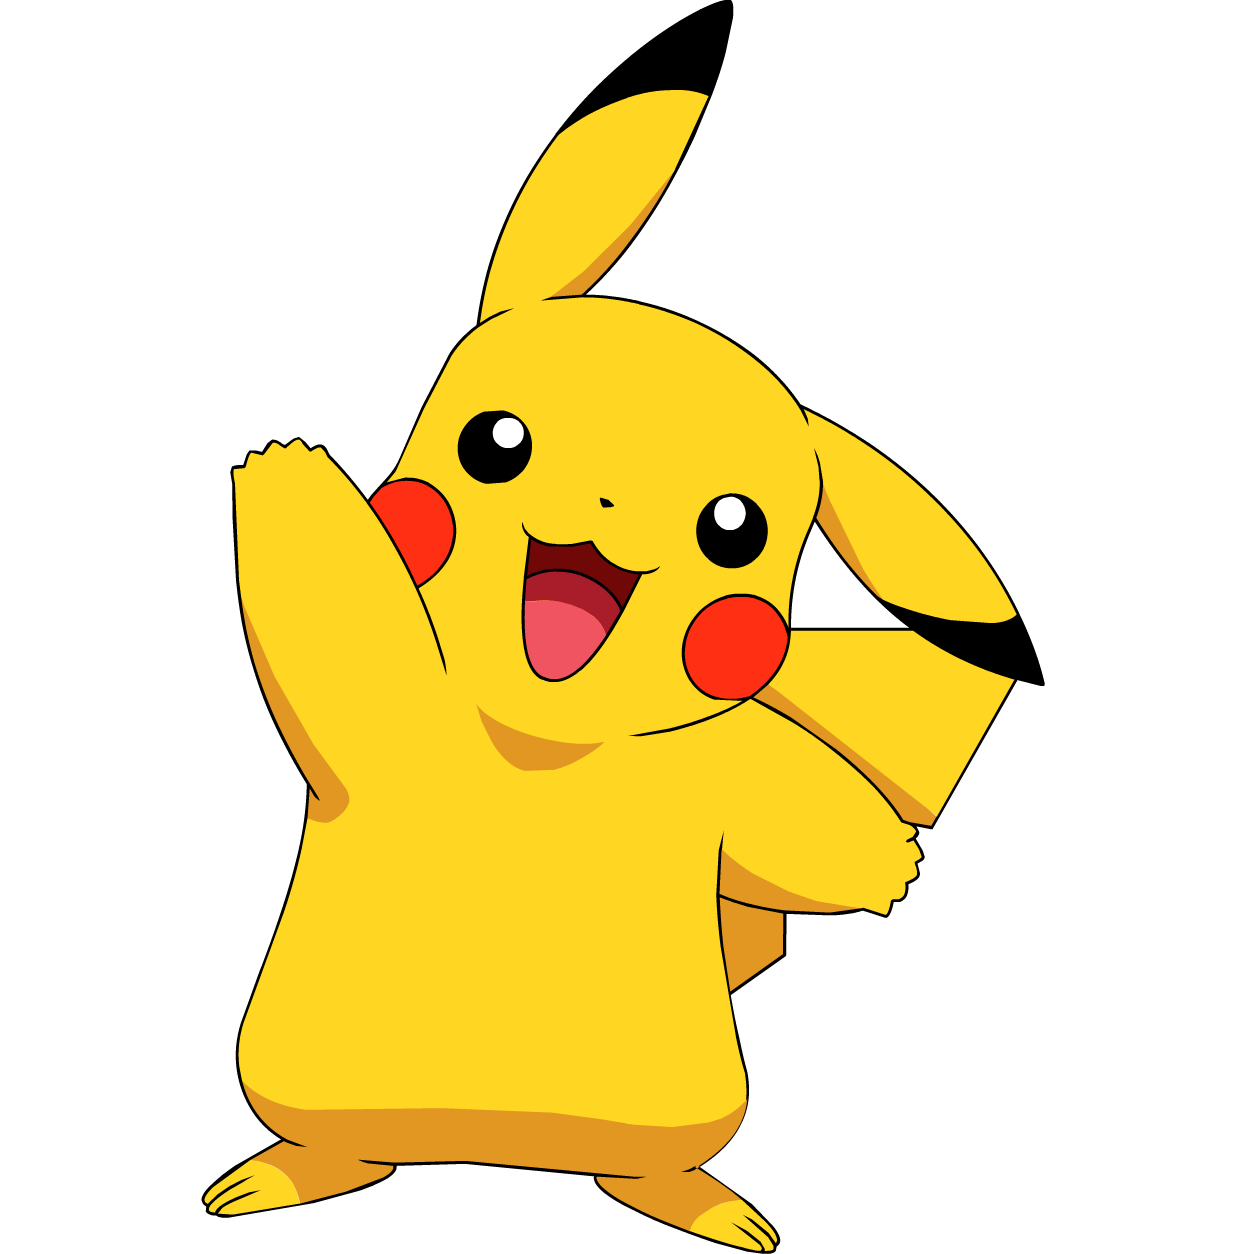 Laughing Pikachu Image - DesiComments.com